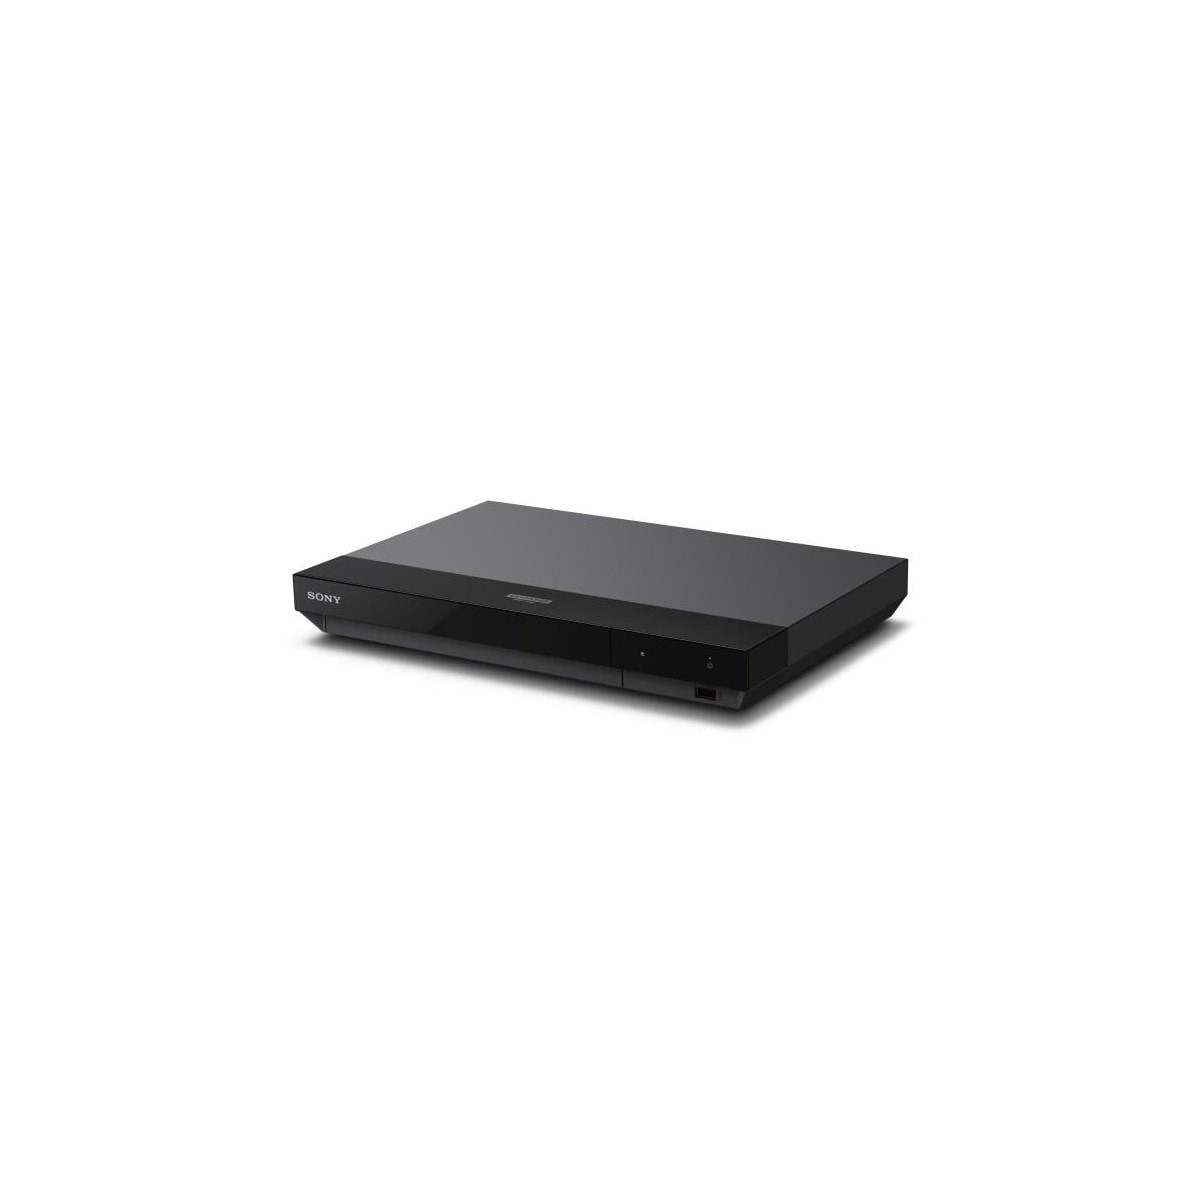 Sony ubp-x500 lecteur blu-ray uhd 4k - port usb - compatible hdr